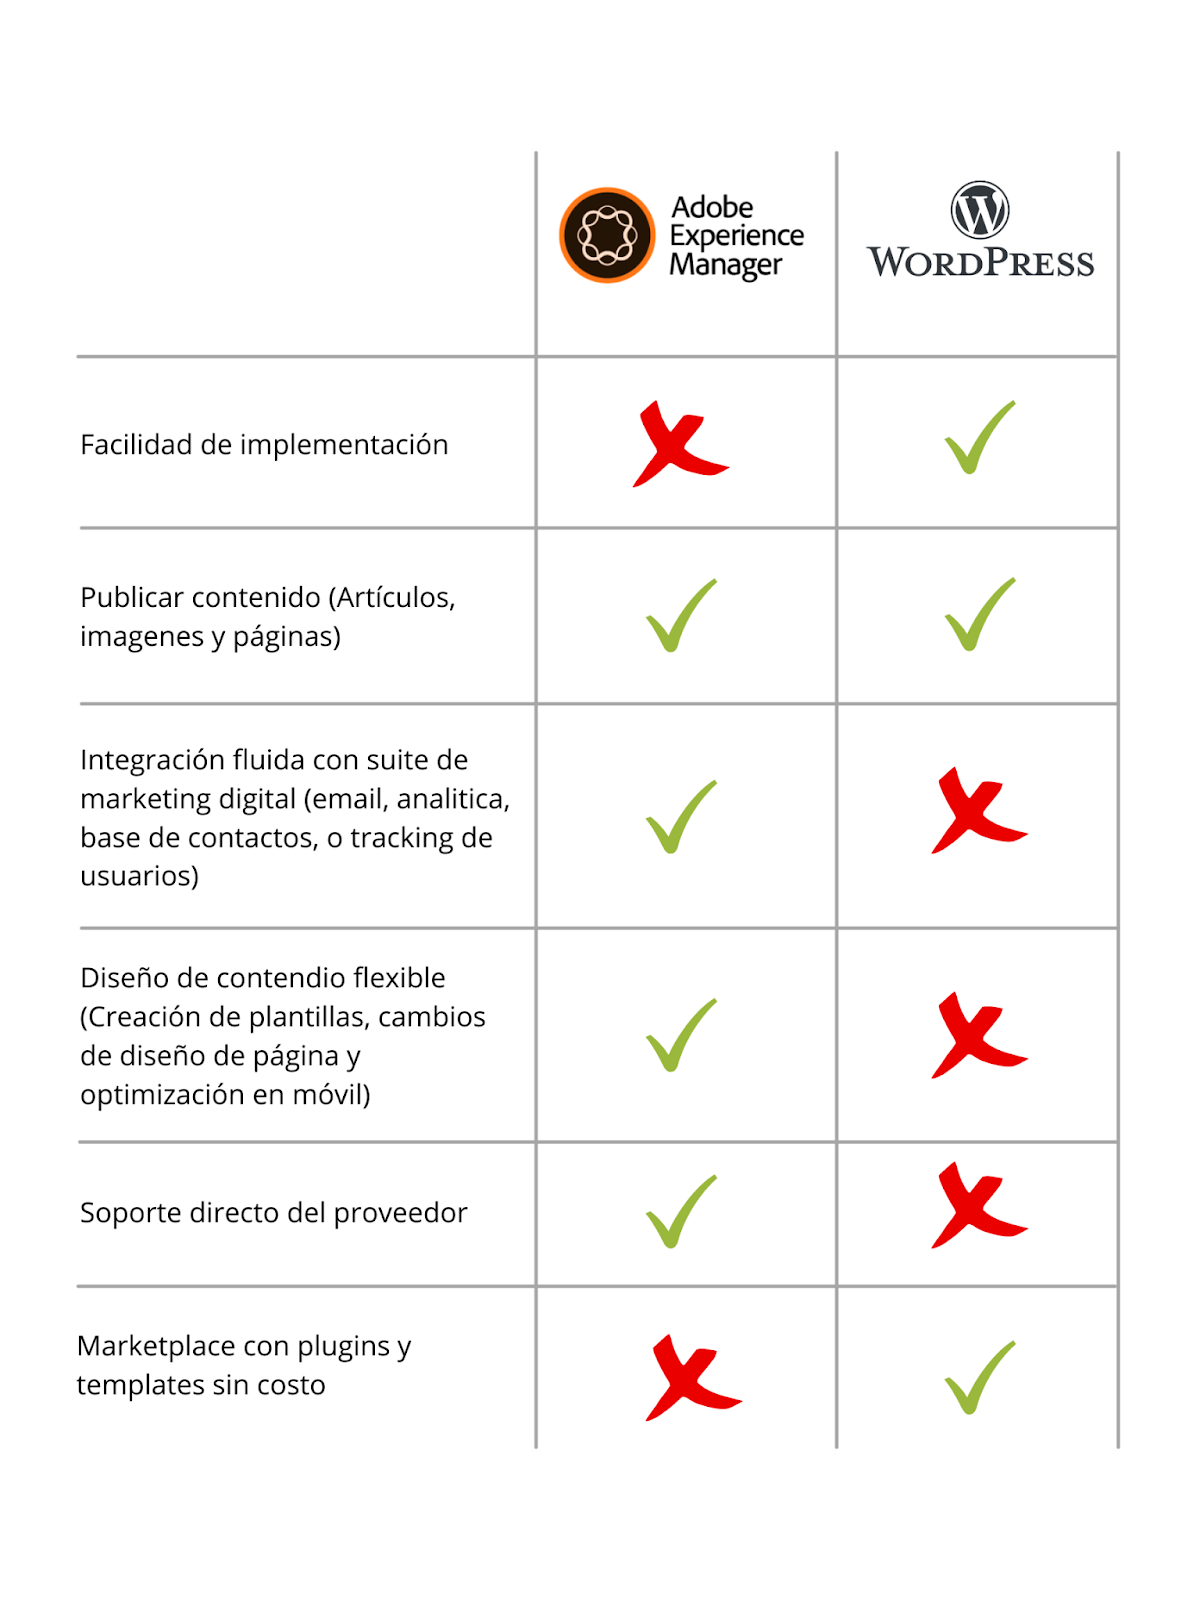 comparativo adobe experience manager wordpress